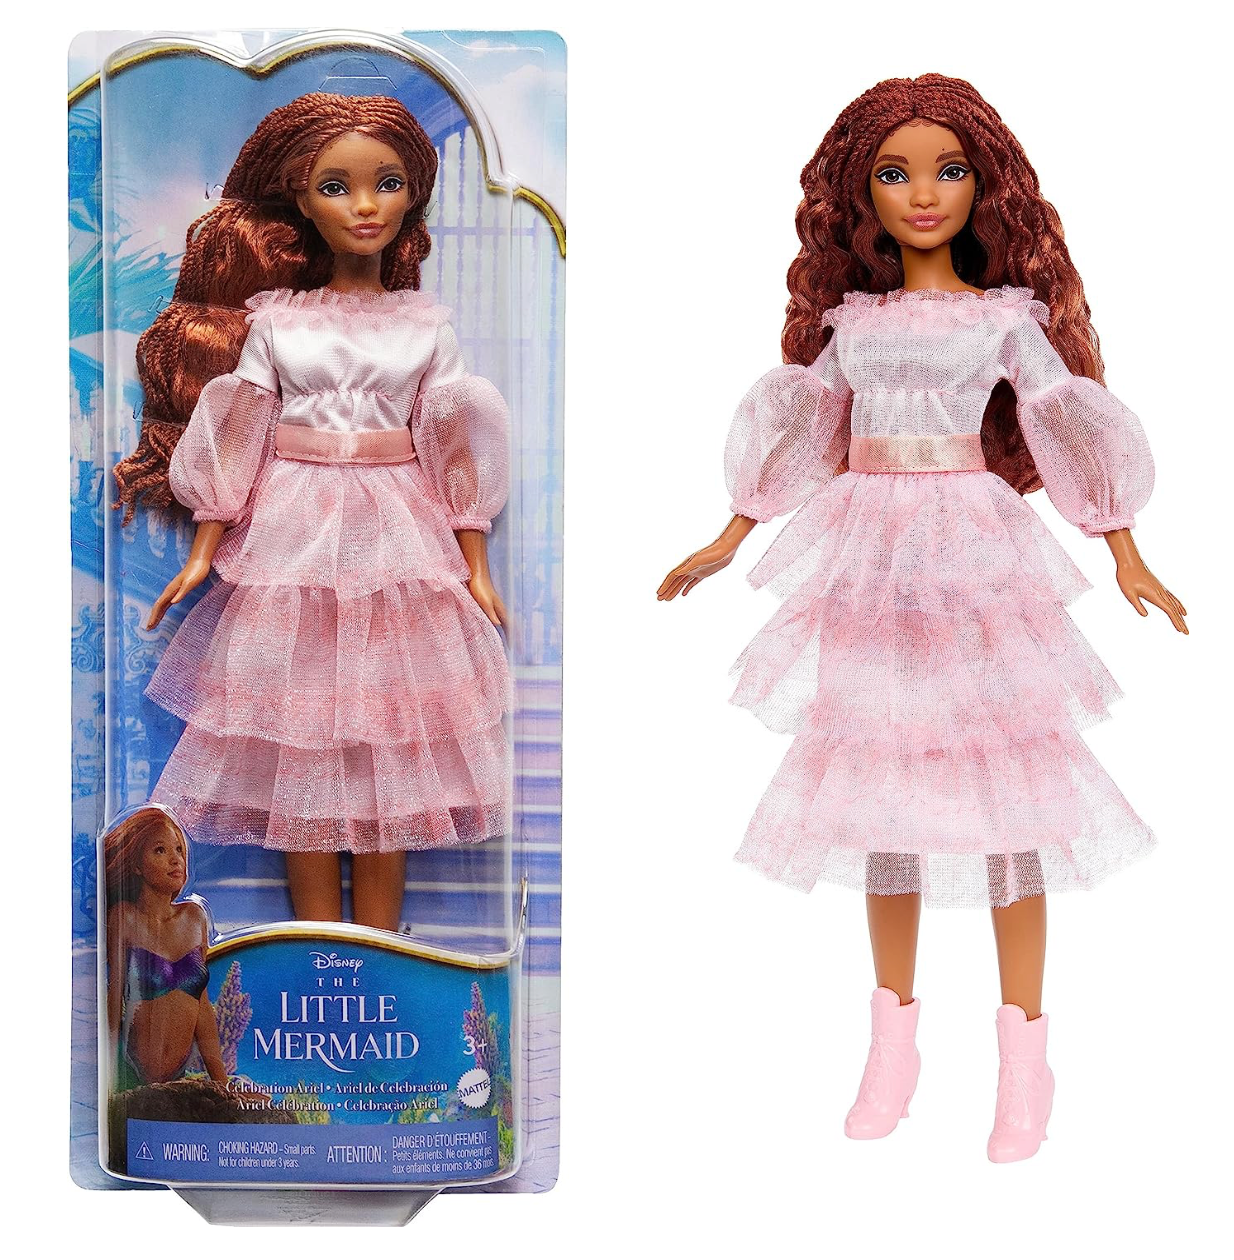 Disney Little Mermaid Celebration Ariel Doll Red Hair Pink Dress New With Box